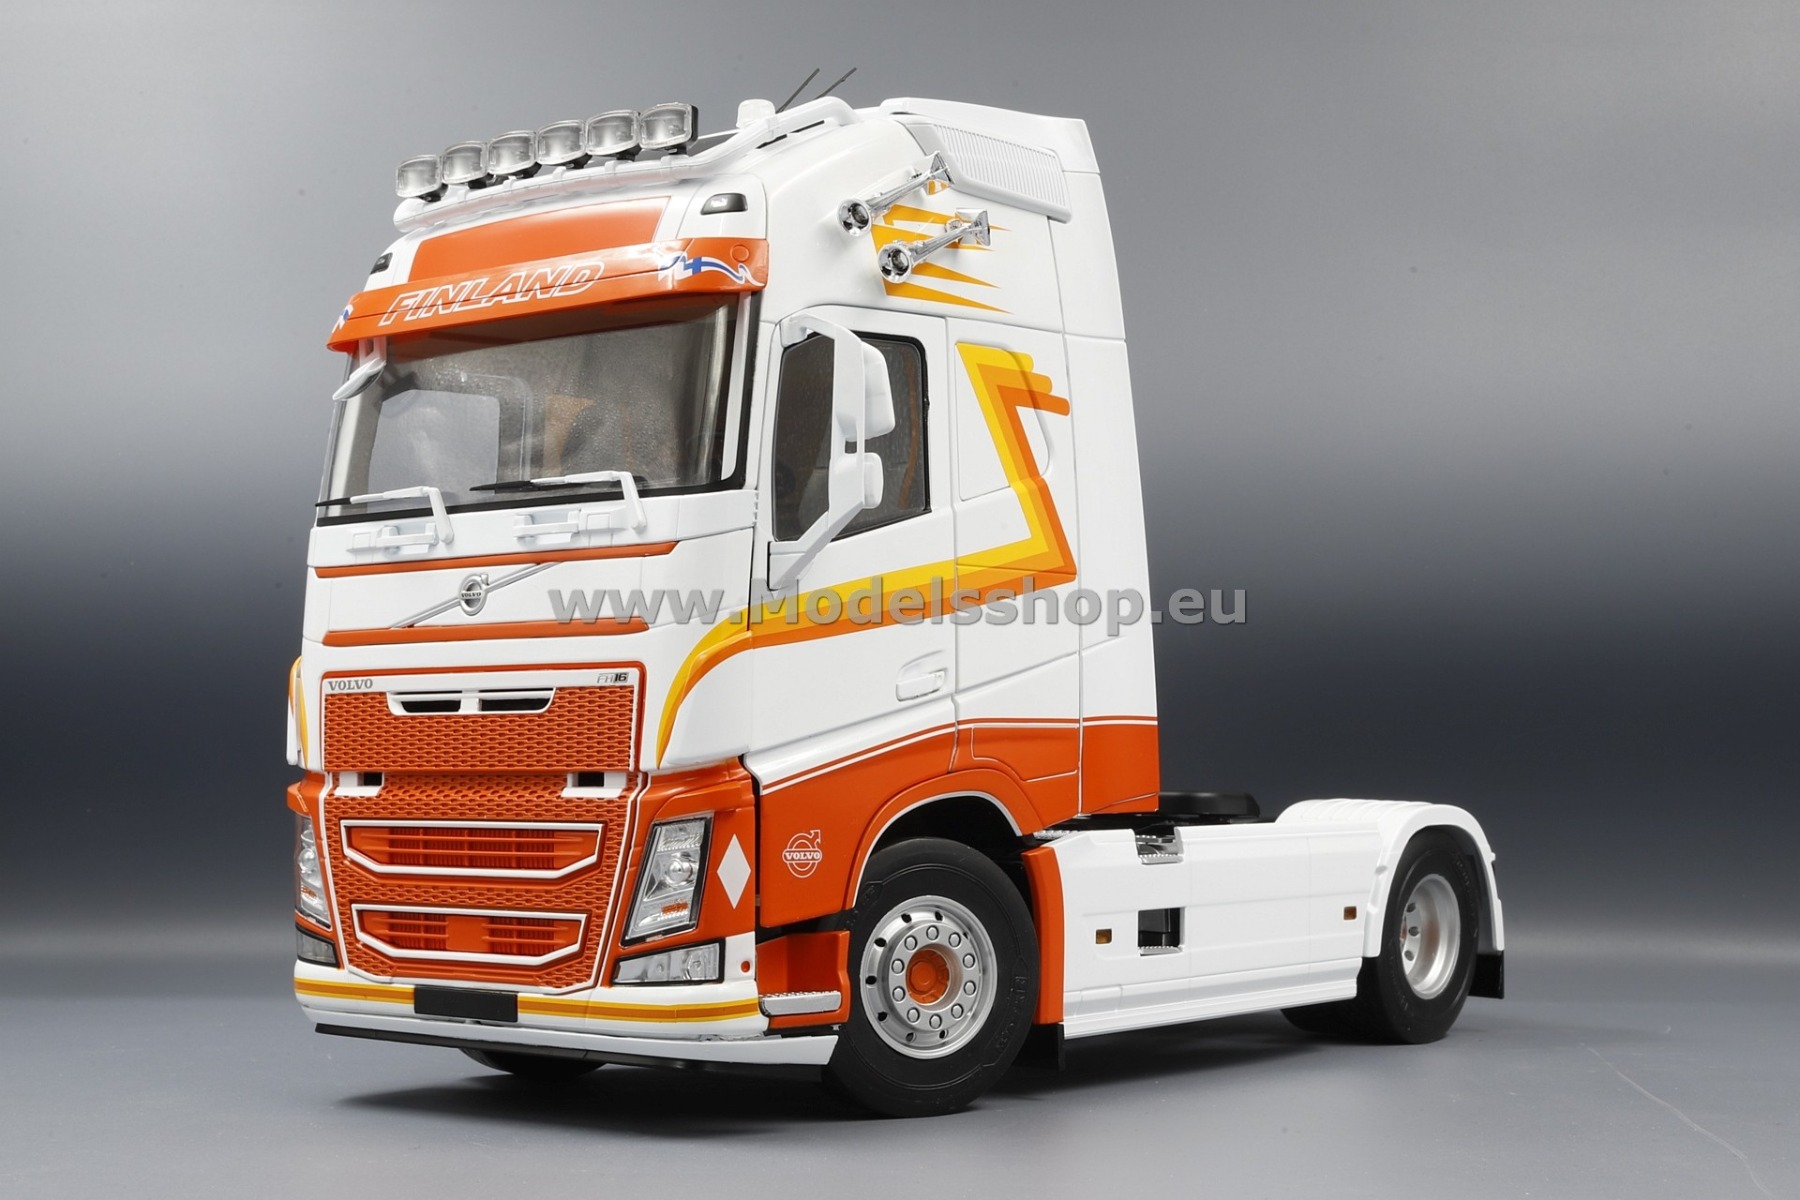 Volvo FH16 XL Cab, tractor truck 2018 /white - orange/